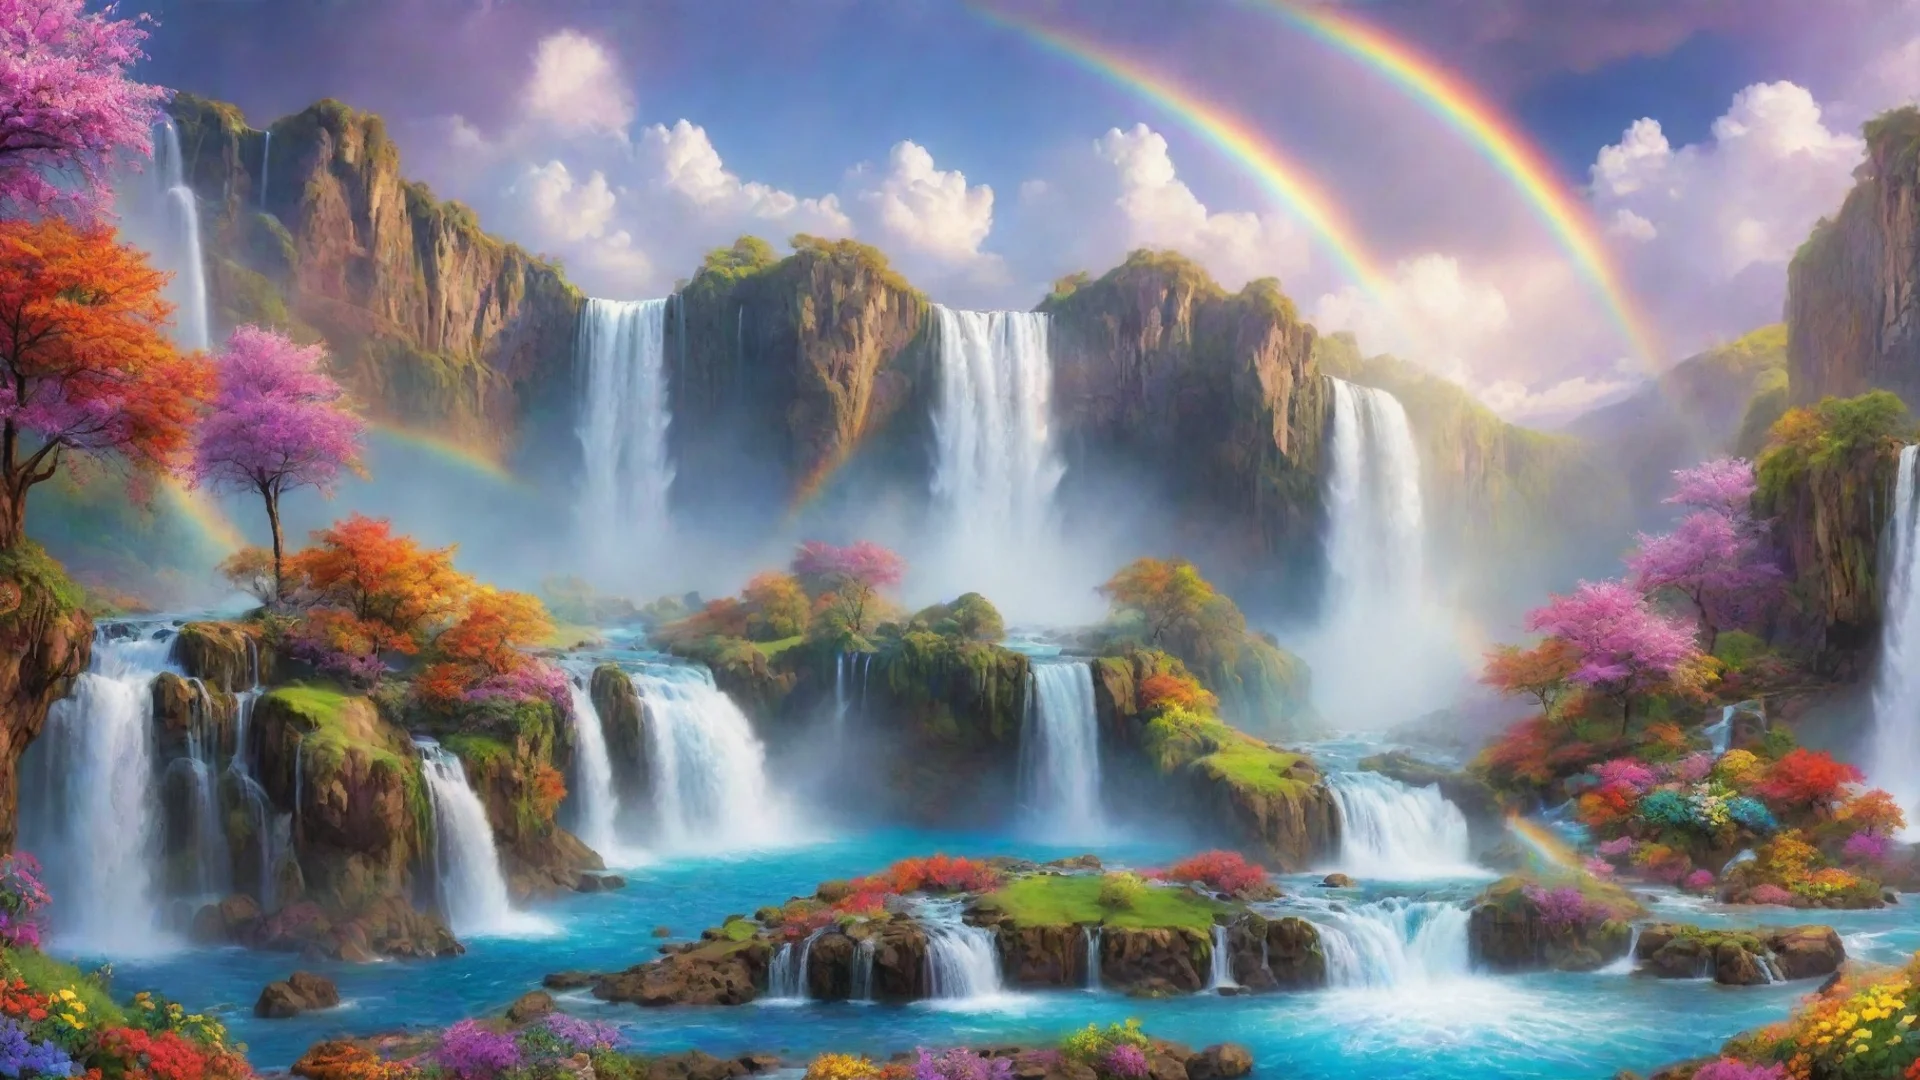 aiamazing dreamy colorful landscape alian world amazing beautiful utopian colors flowers waterfalls rainbows clouds awesome portrait 2 wide